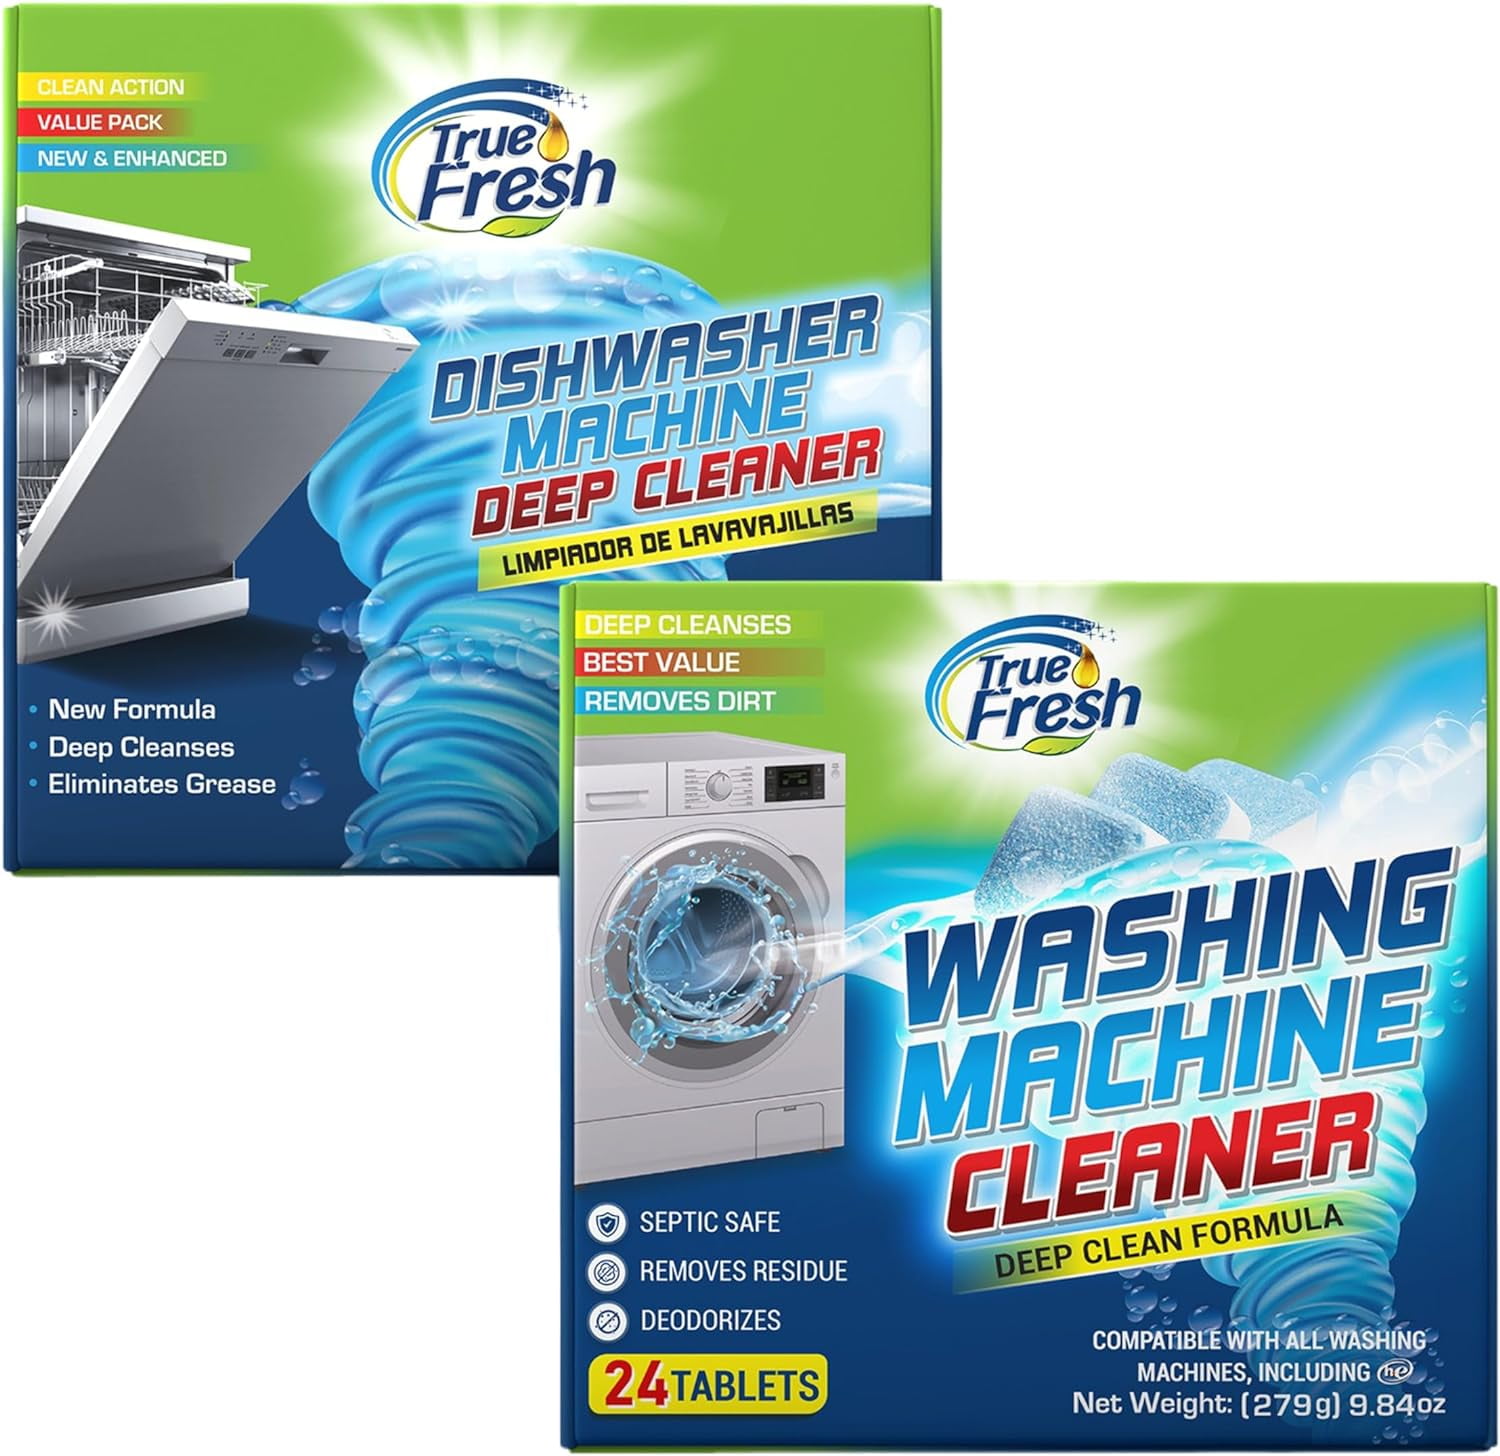 Glisten® Washer Magic® Washing Machine Cleaner